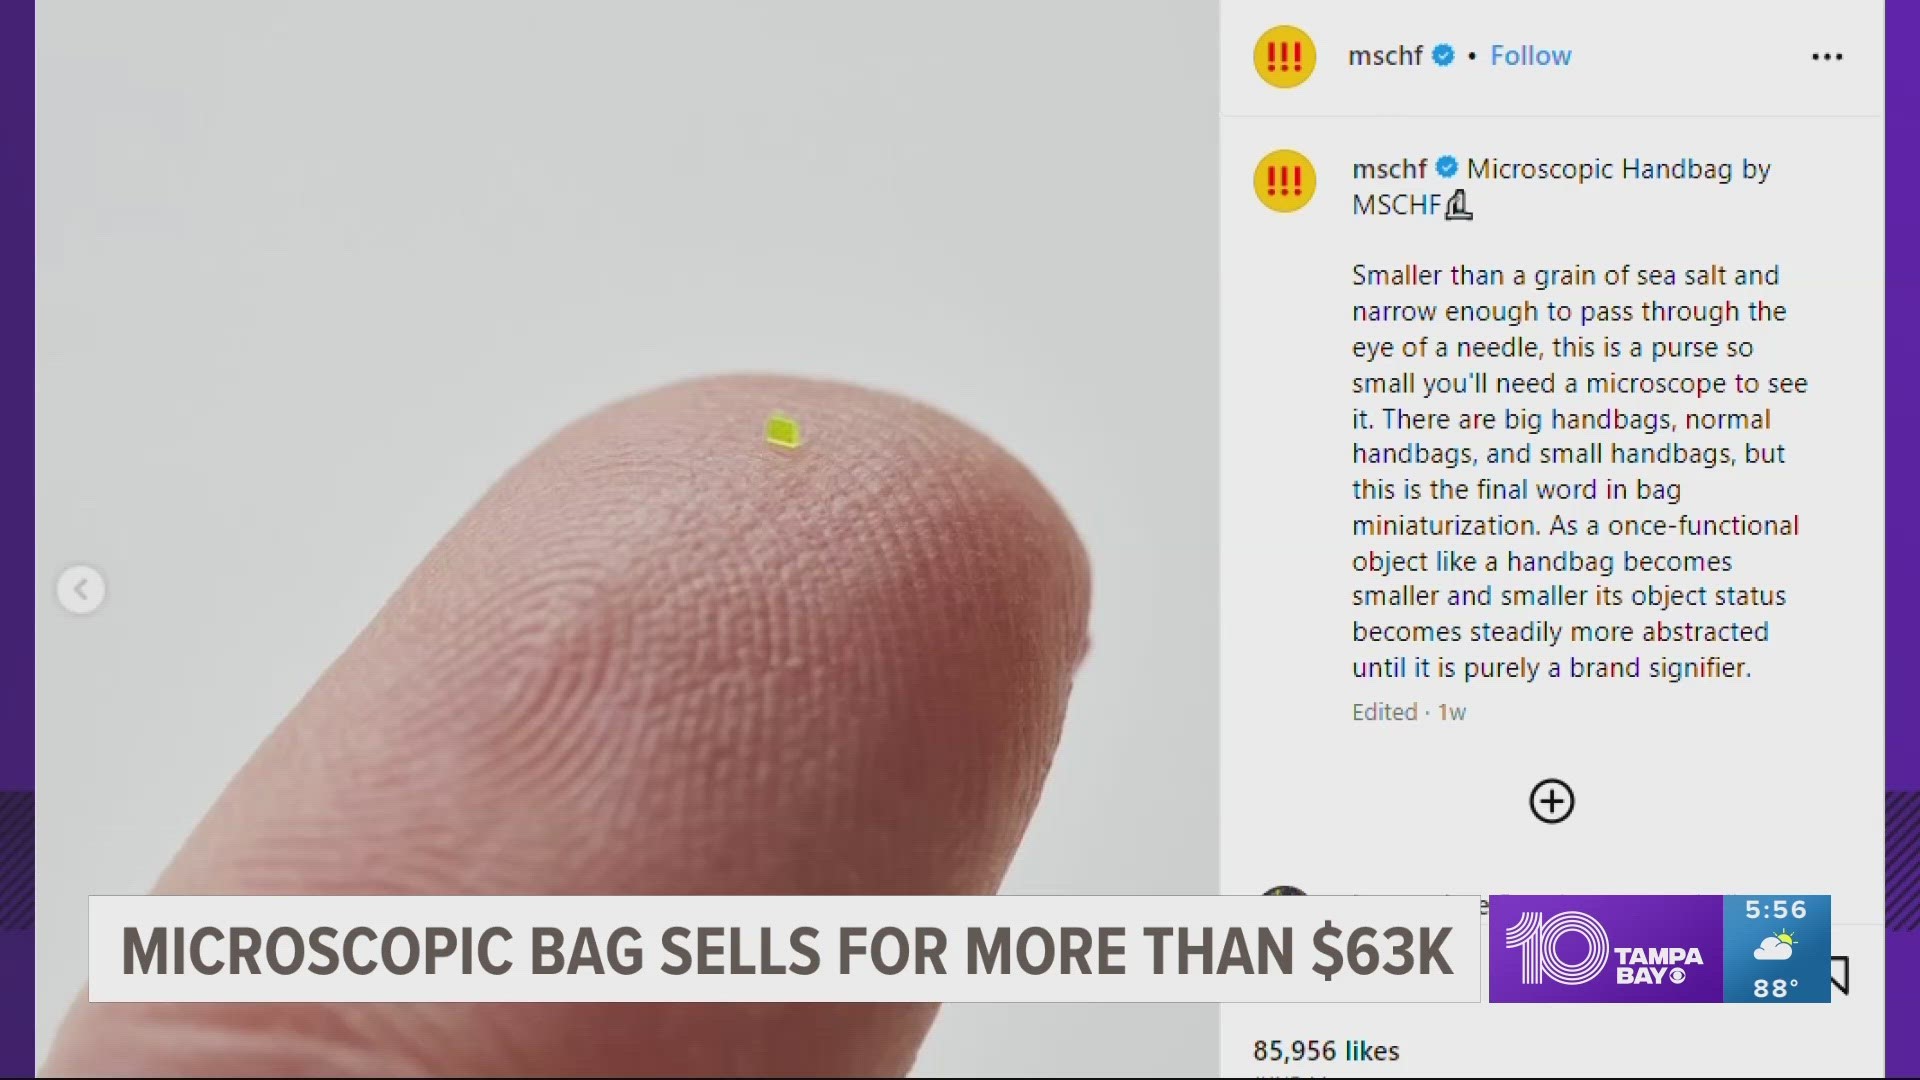 Microscopic handbag 'smaller than grain of salt' sells for more than  $63,000